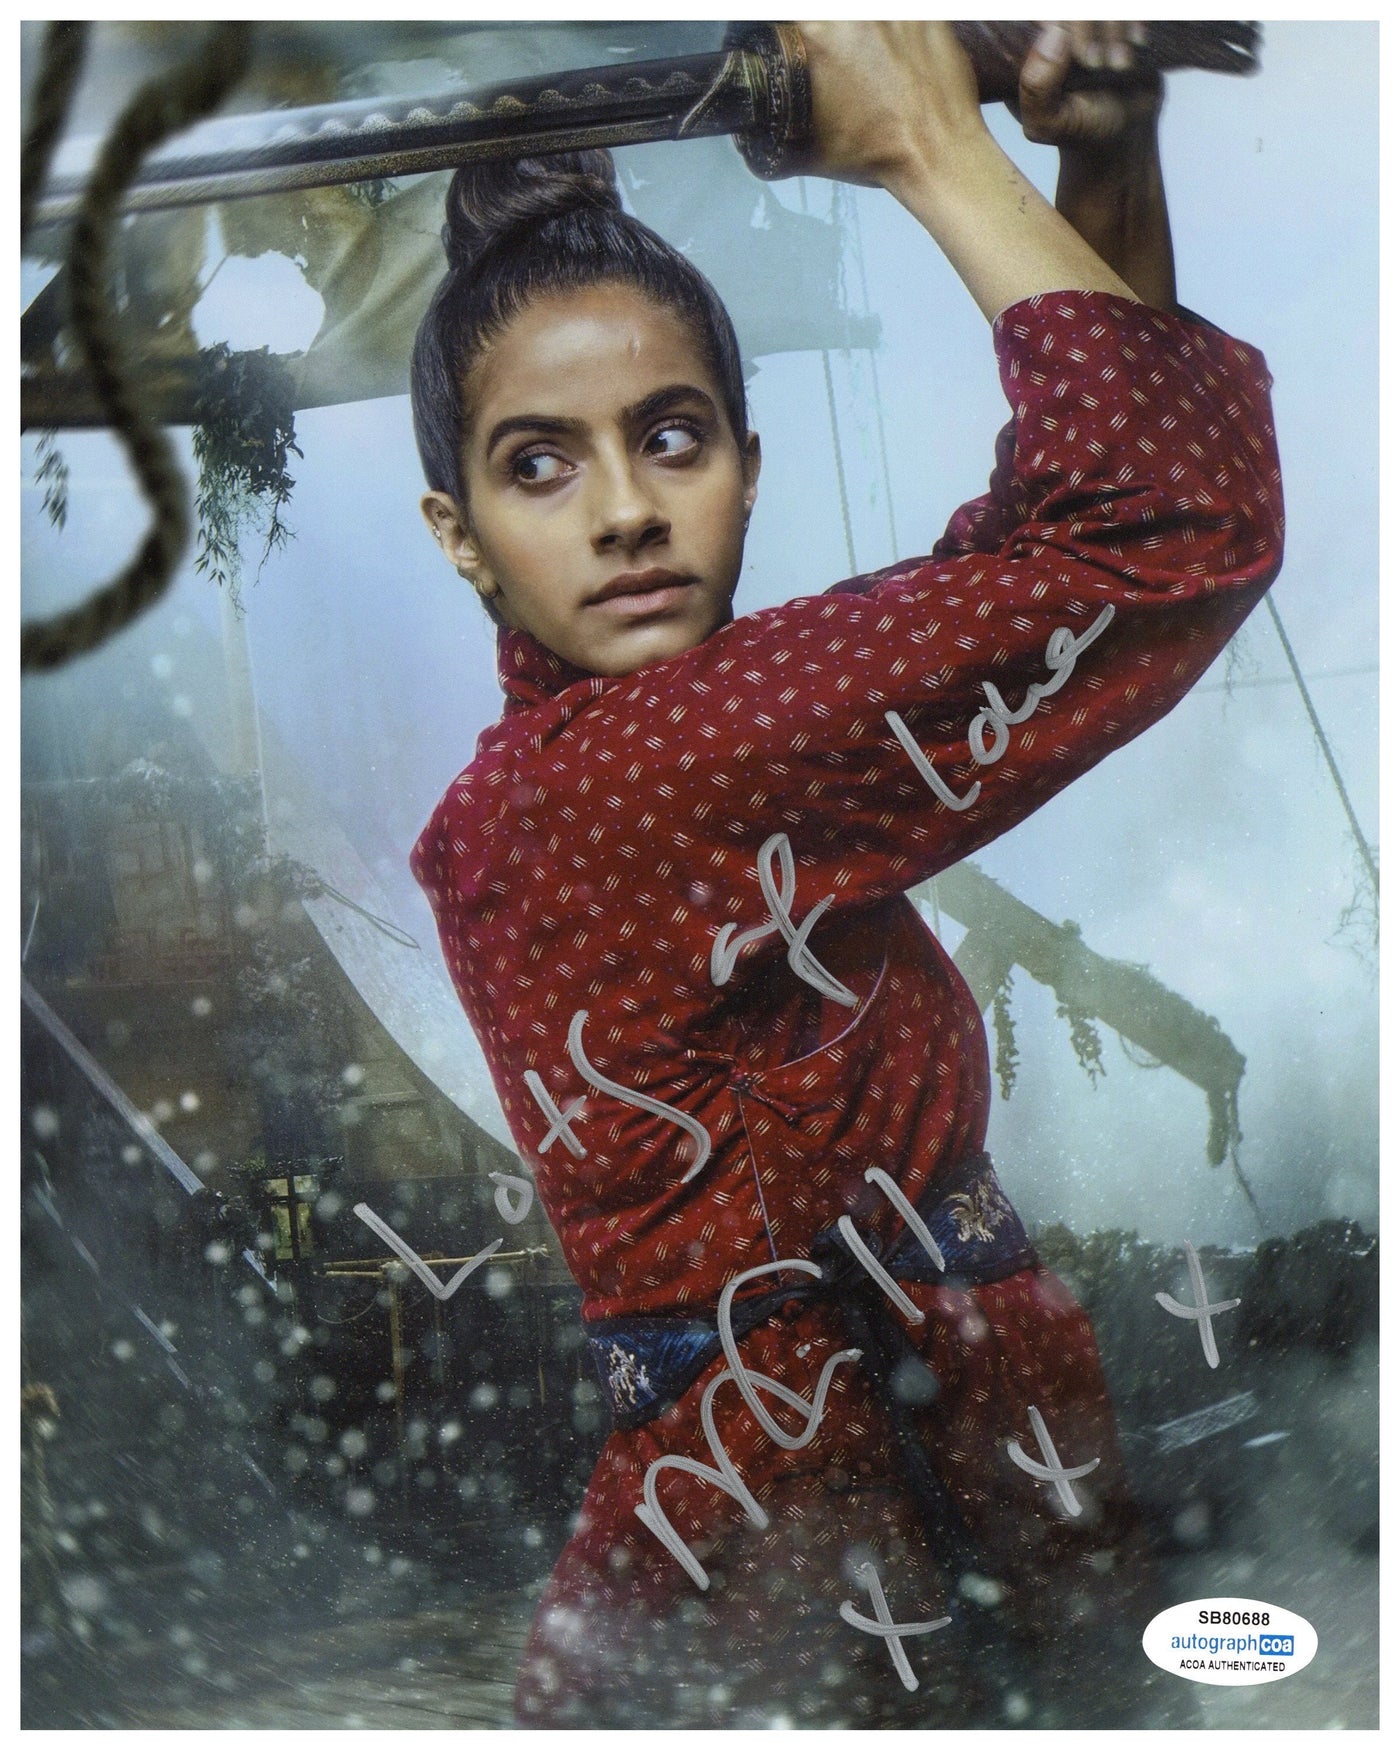 Mandip Gill Signed 8x10 Photo Dr. Who Yasmin Khan Autographed ACOA